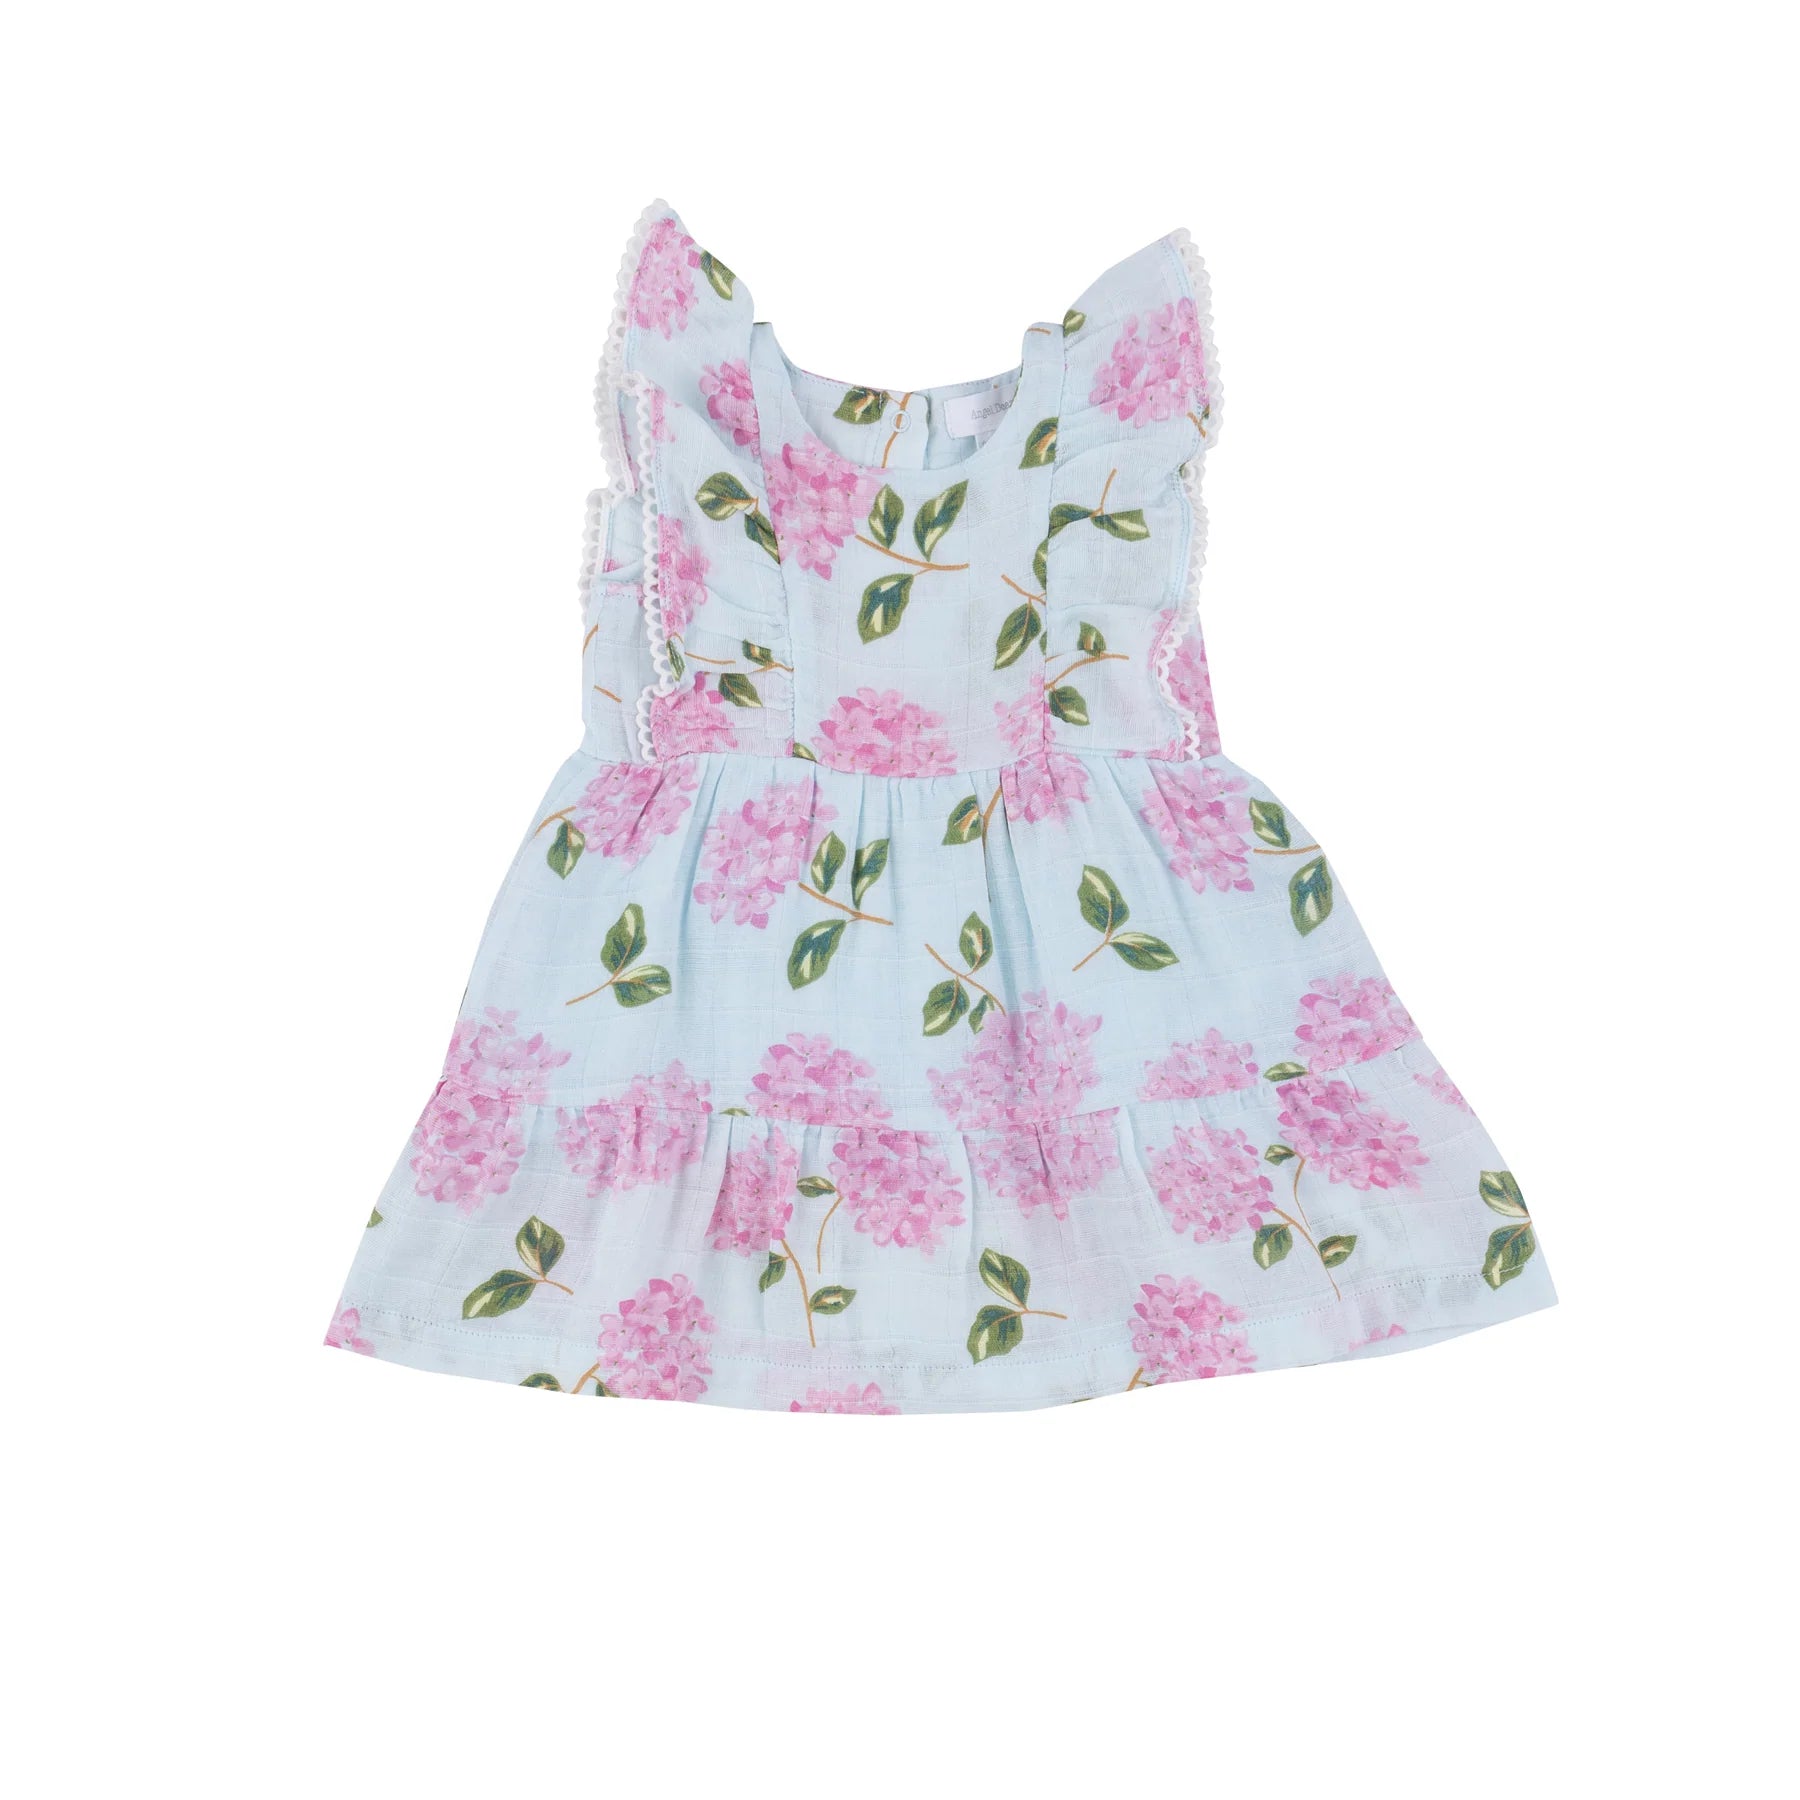 Hydrangeas Picot Trim Edged Dress + Diaper Cover - Twinkle Twinkle Little One